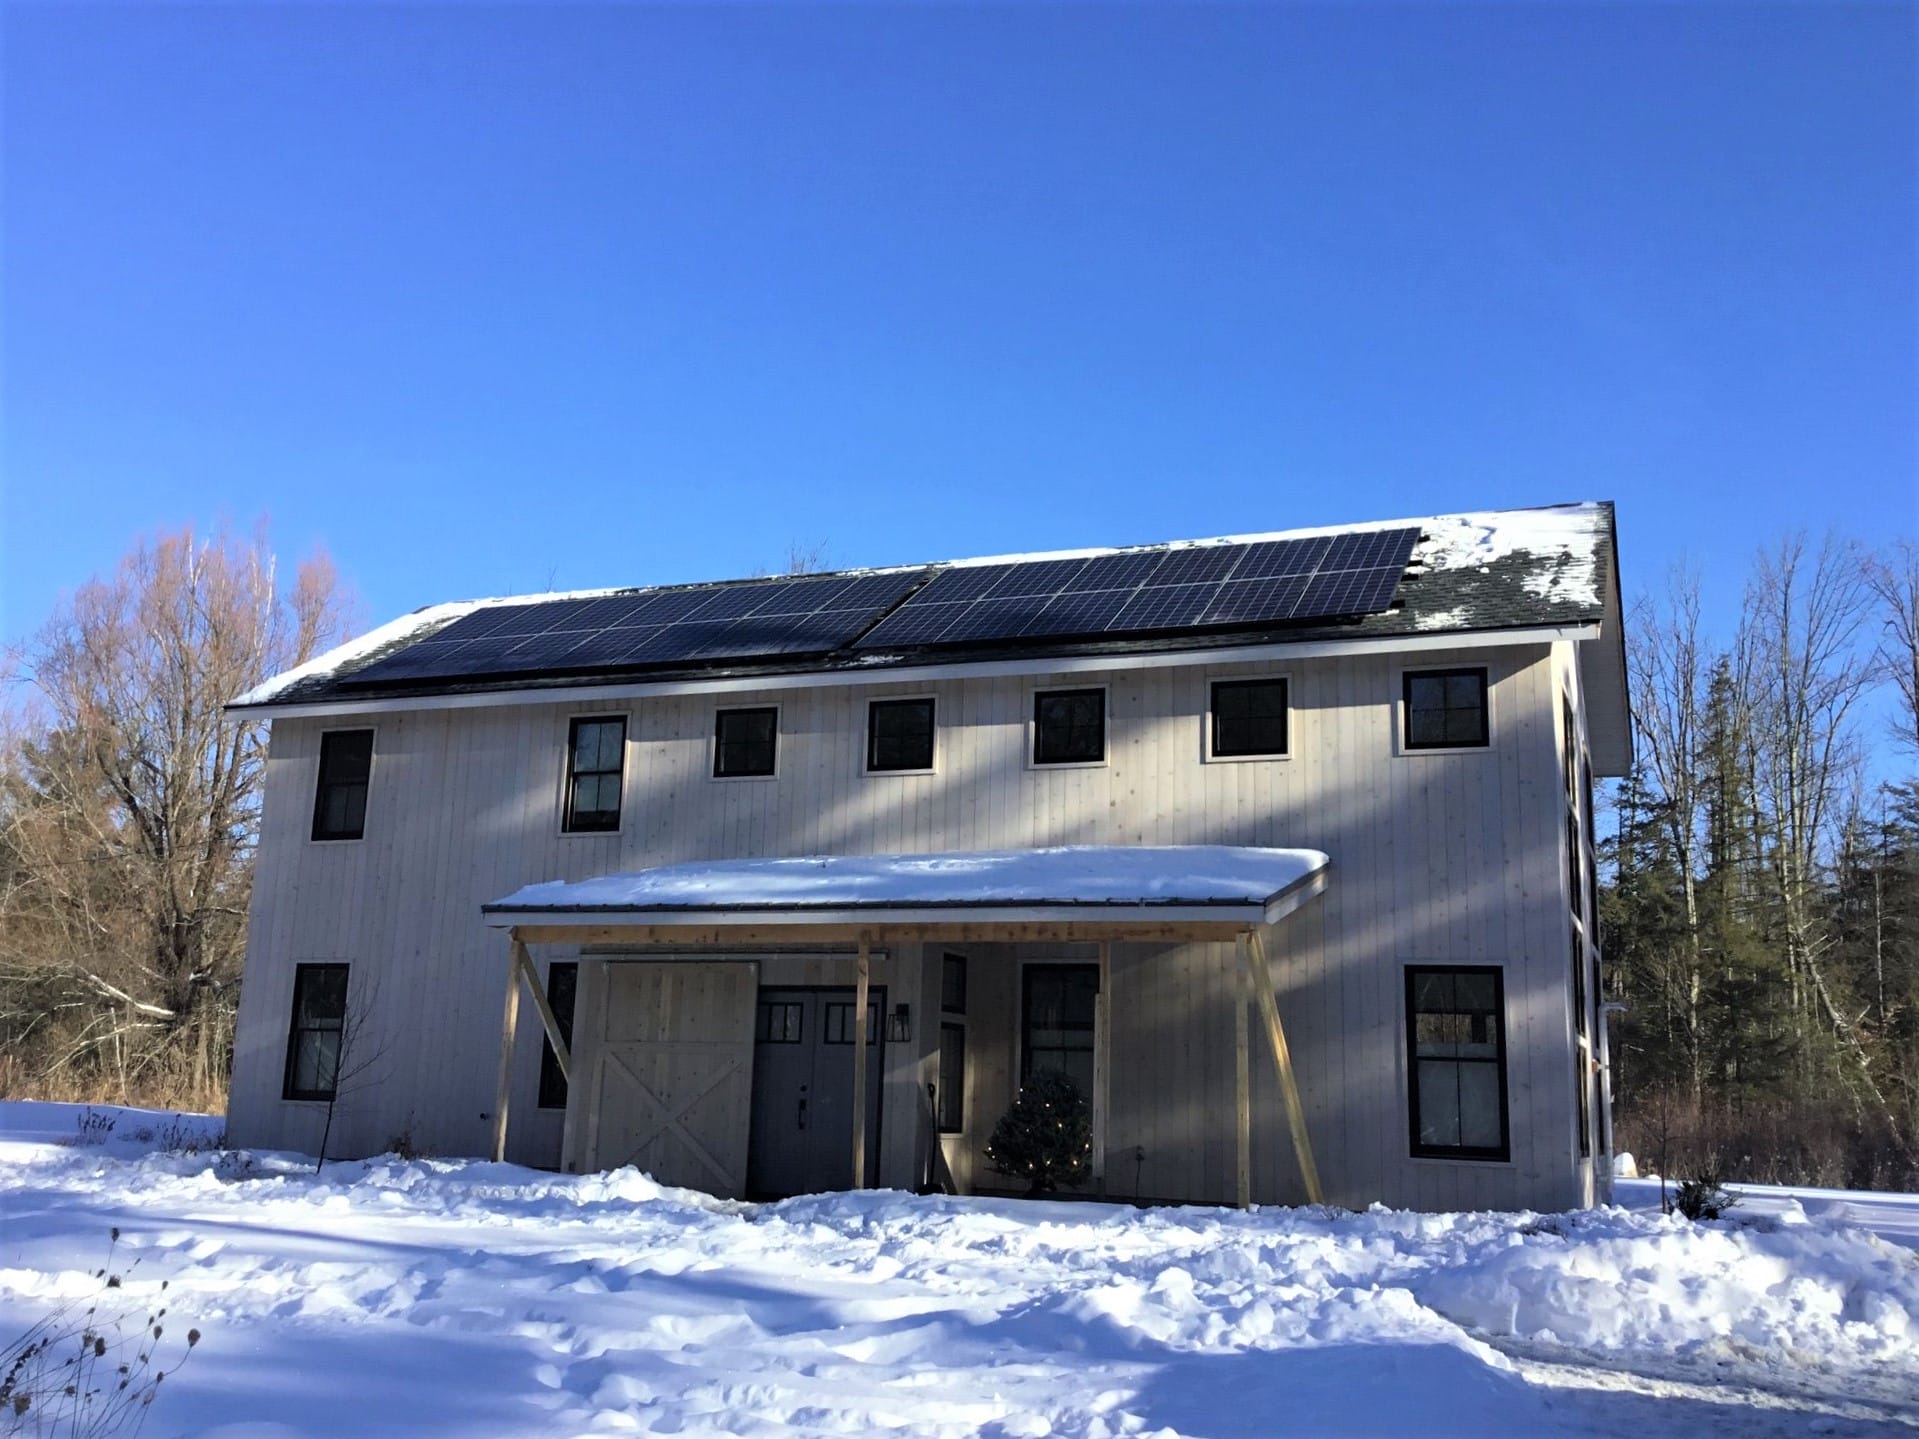 West Road Solar Installation Photo